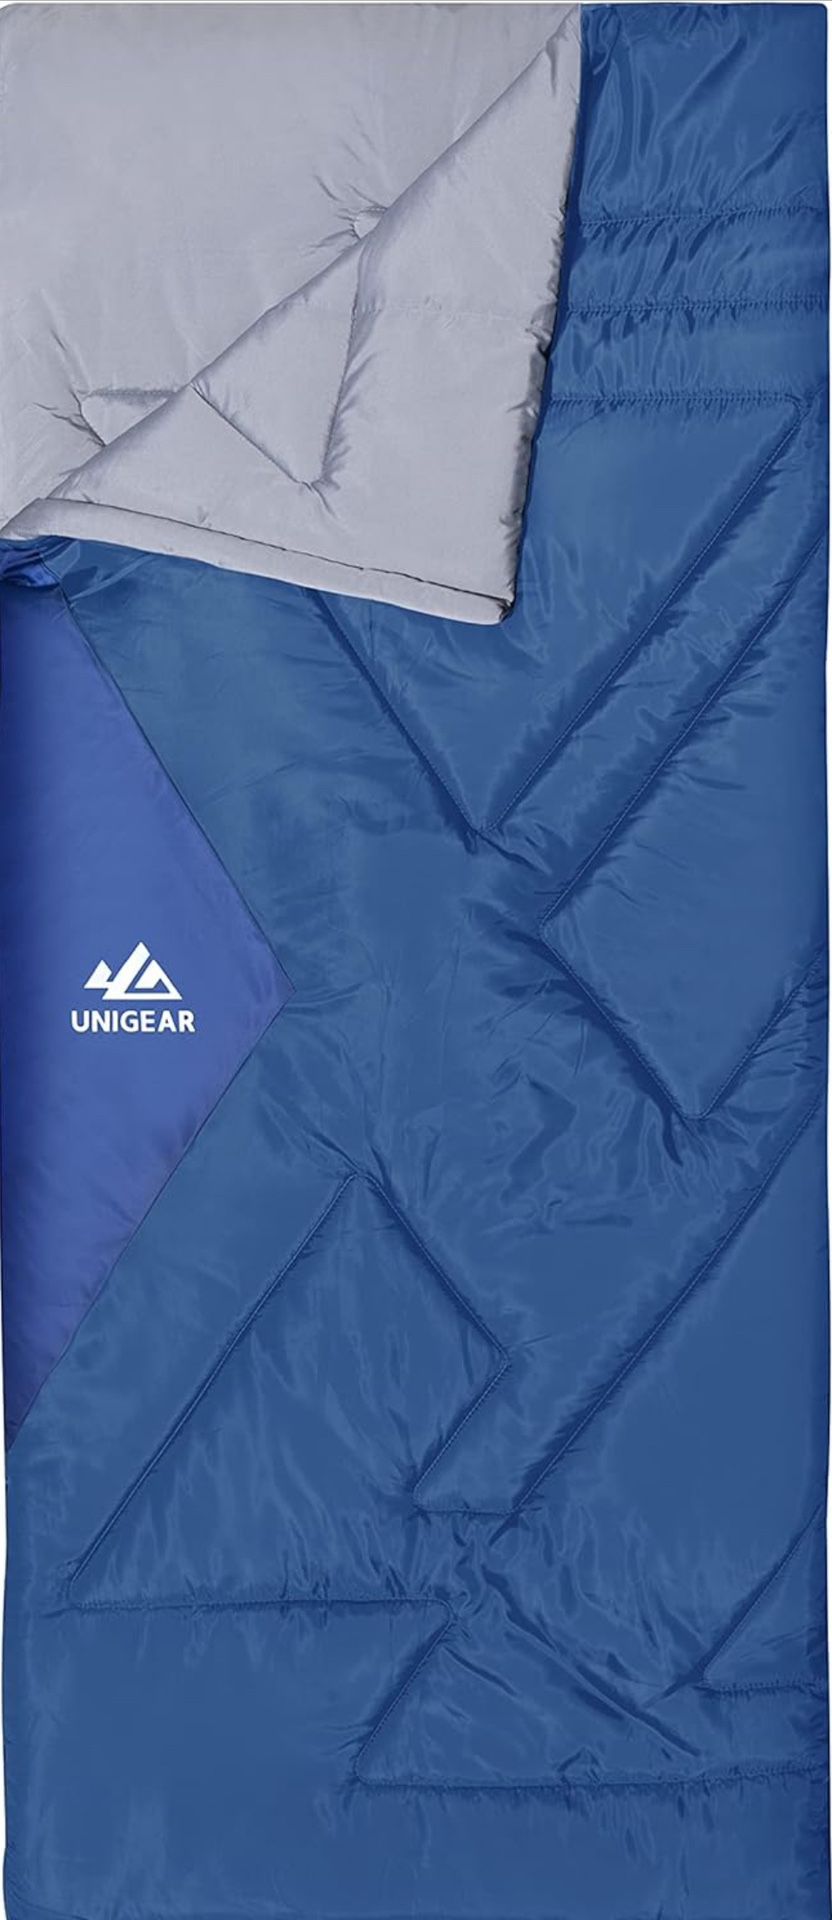 Unibag Camfy Bed 50F Sleeping Bag - Premium Comfortable Sleeping Bag 